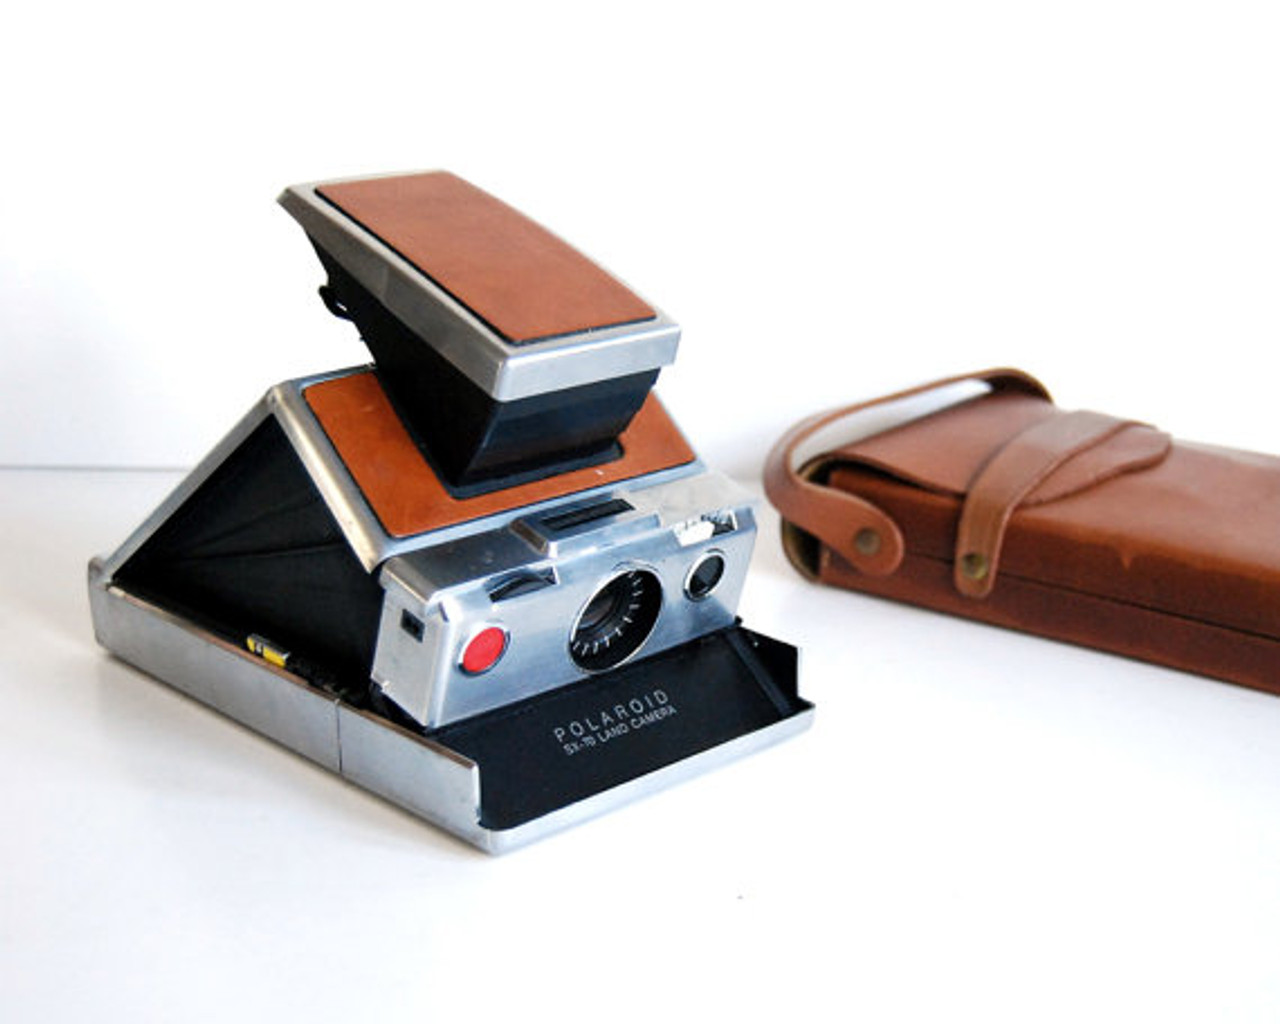 Polaroid Originals SX-70 Instant Film Camera (Silver and Brown) at